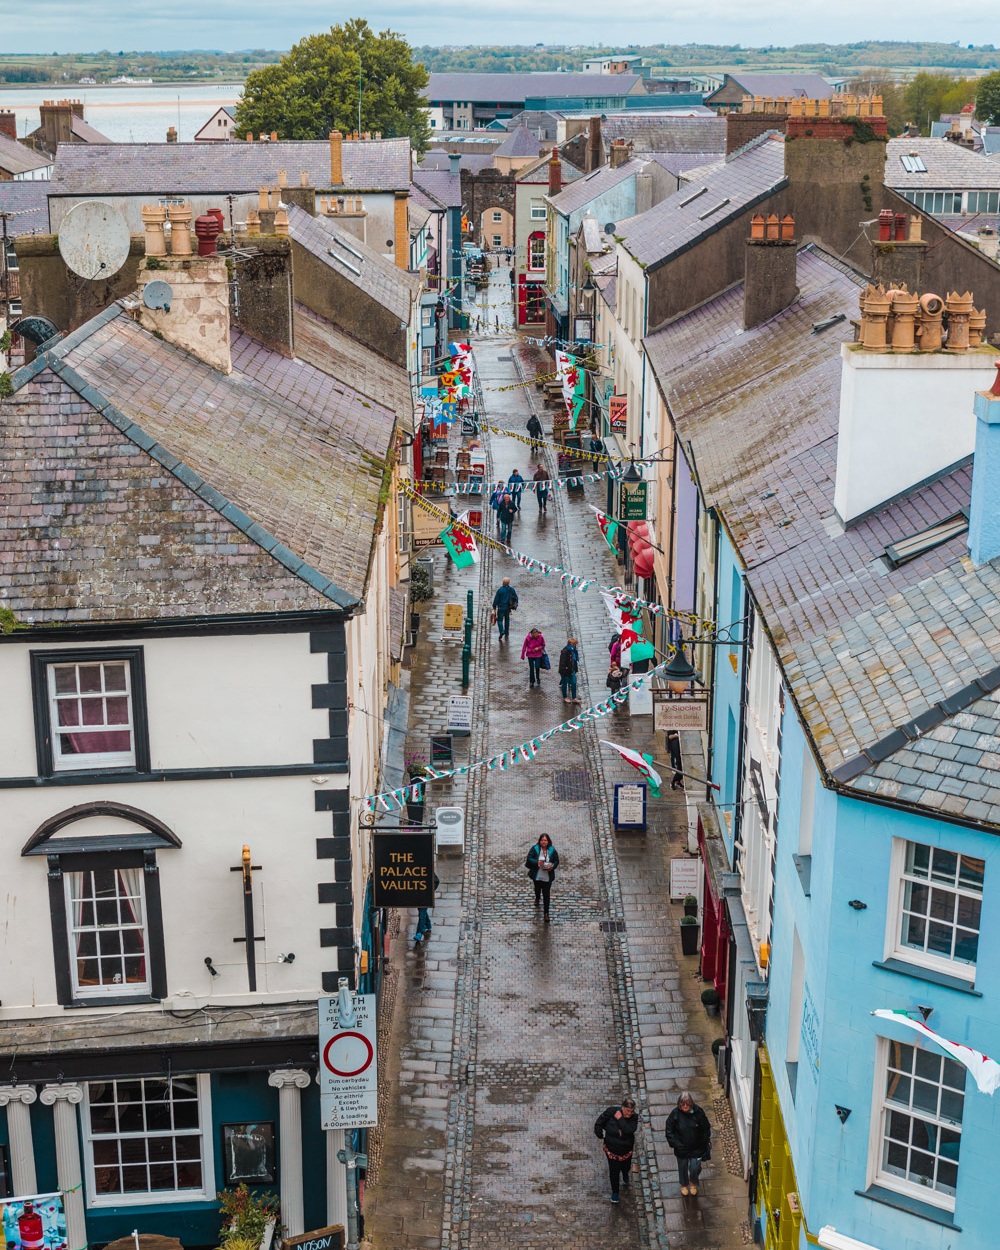 Caernarfon town // The Most Beautiful Places to Visit in Wales // #readysetjetset #wales #uk #welsh #travel #photospots #blogpost